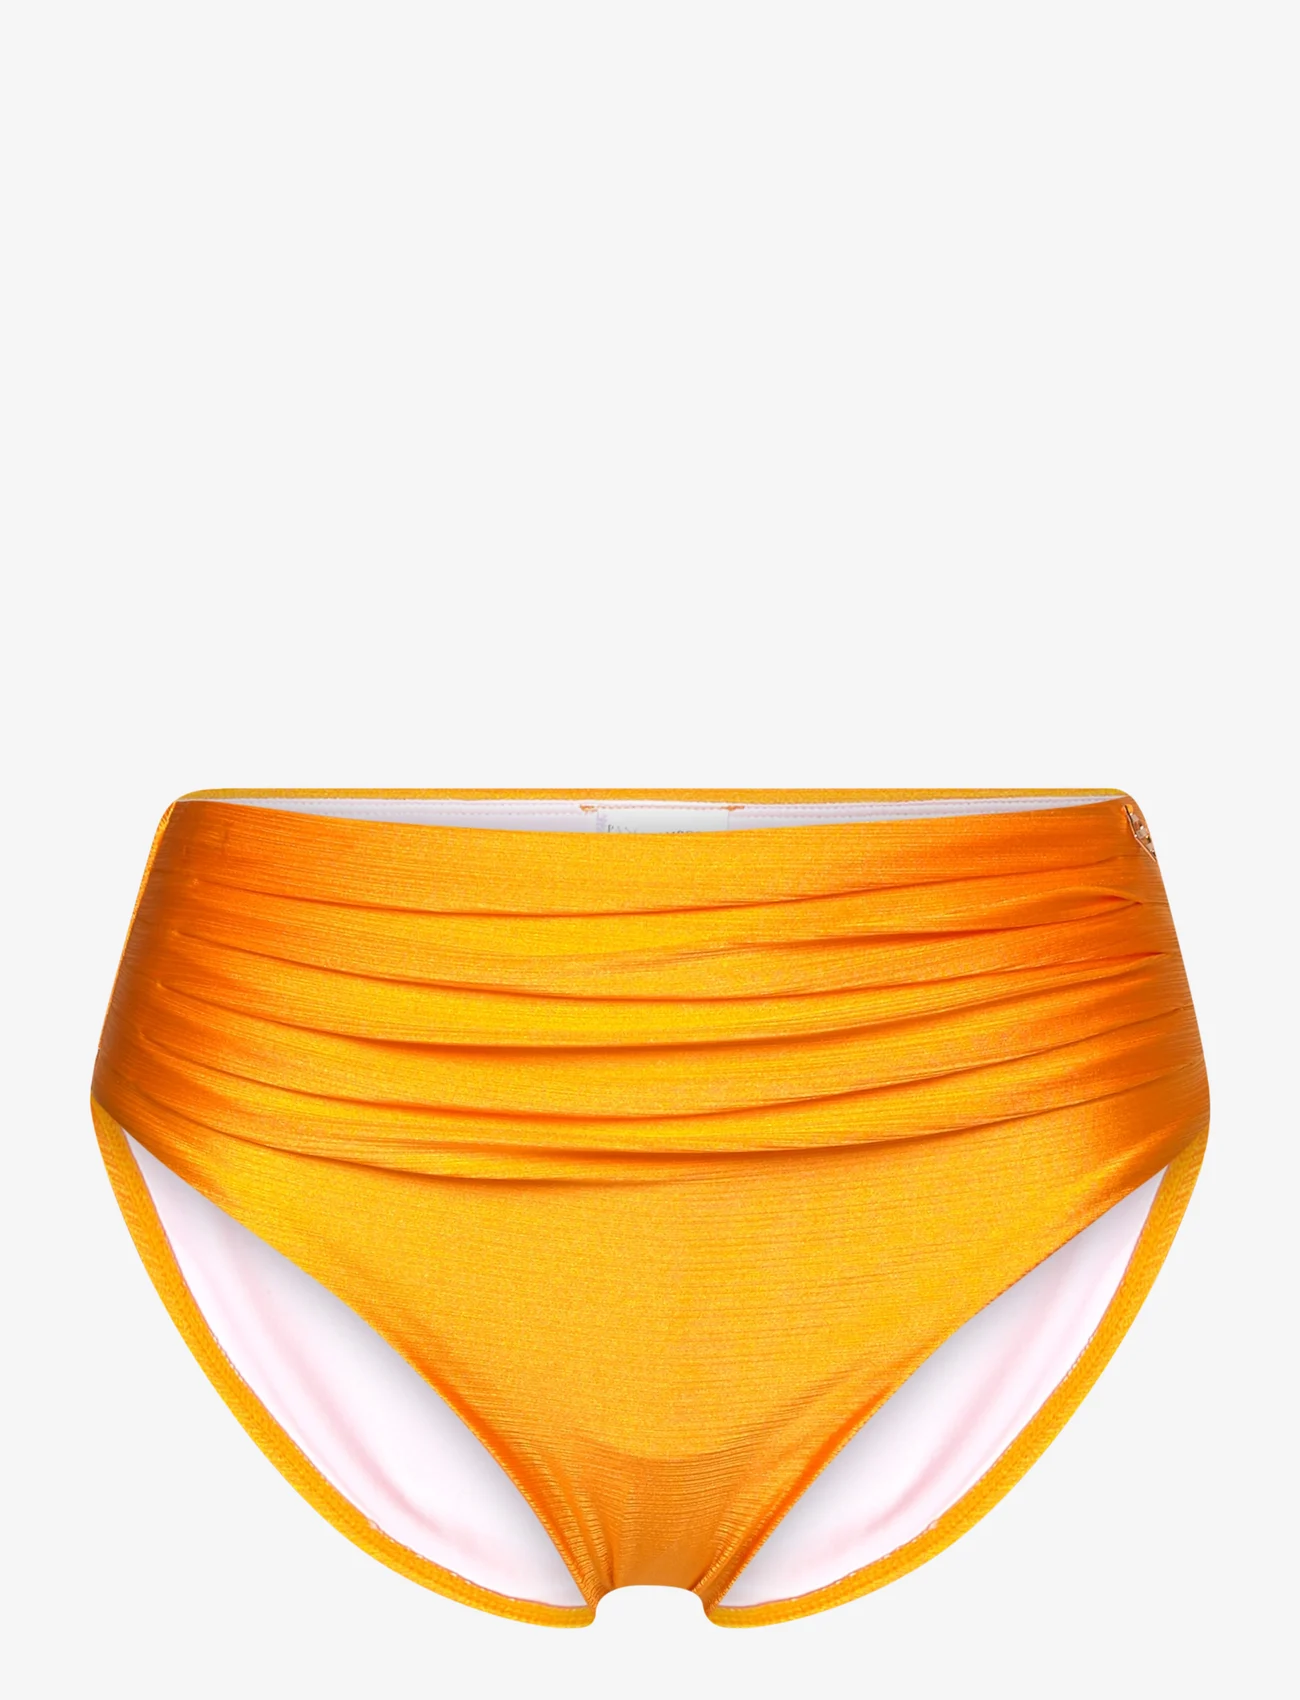 Panos Emporio - Amber Olympia Bottom - bikini briefs - daylili - 1